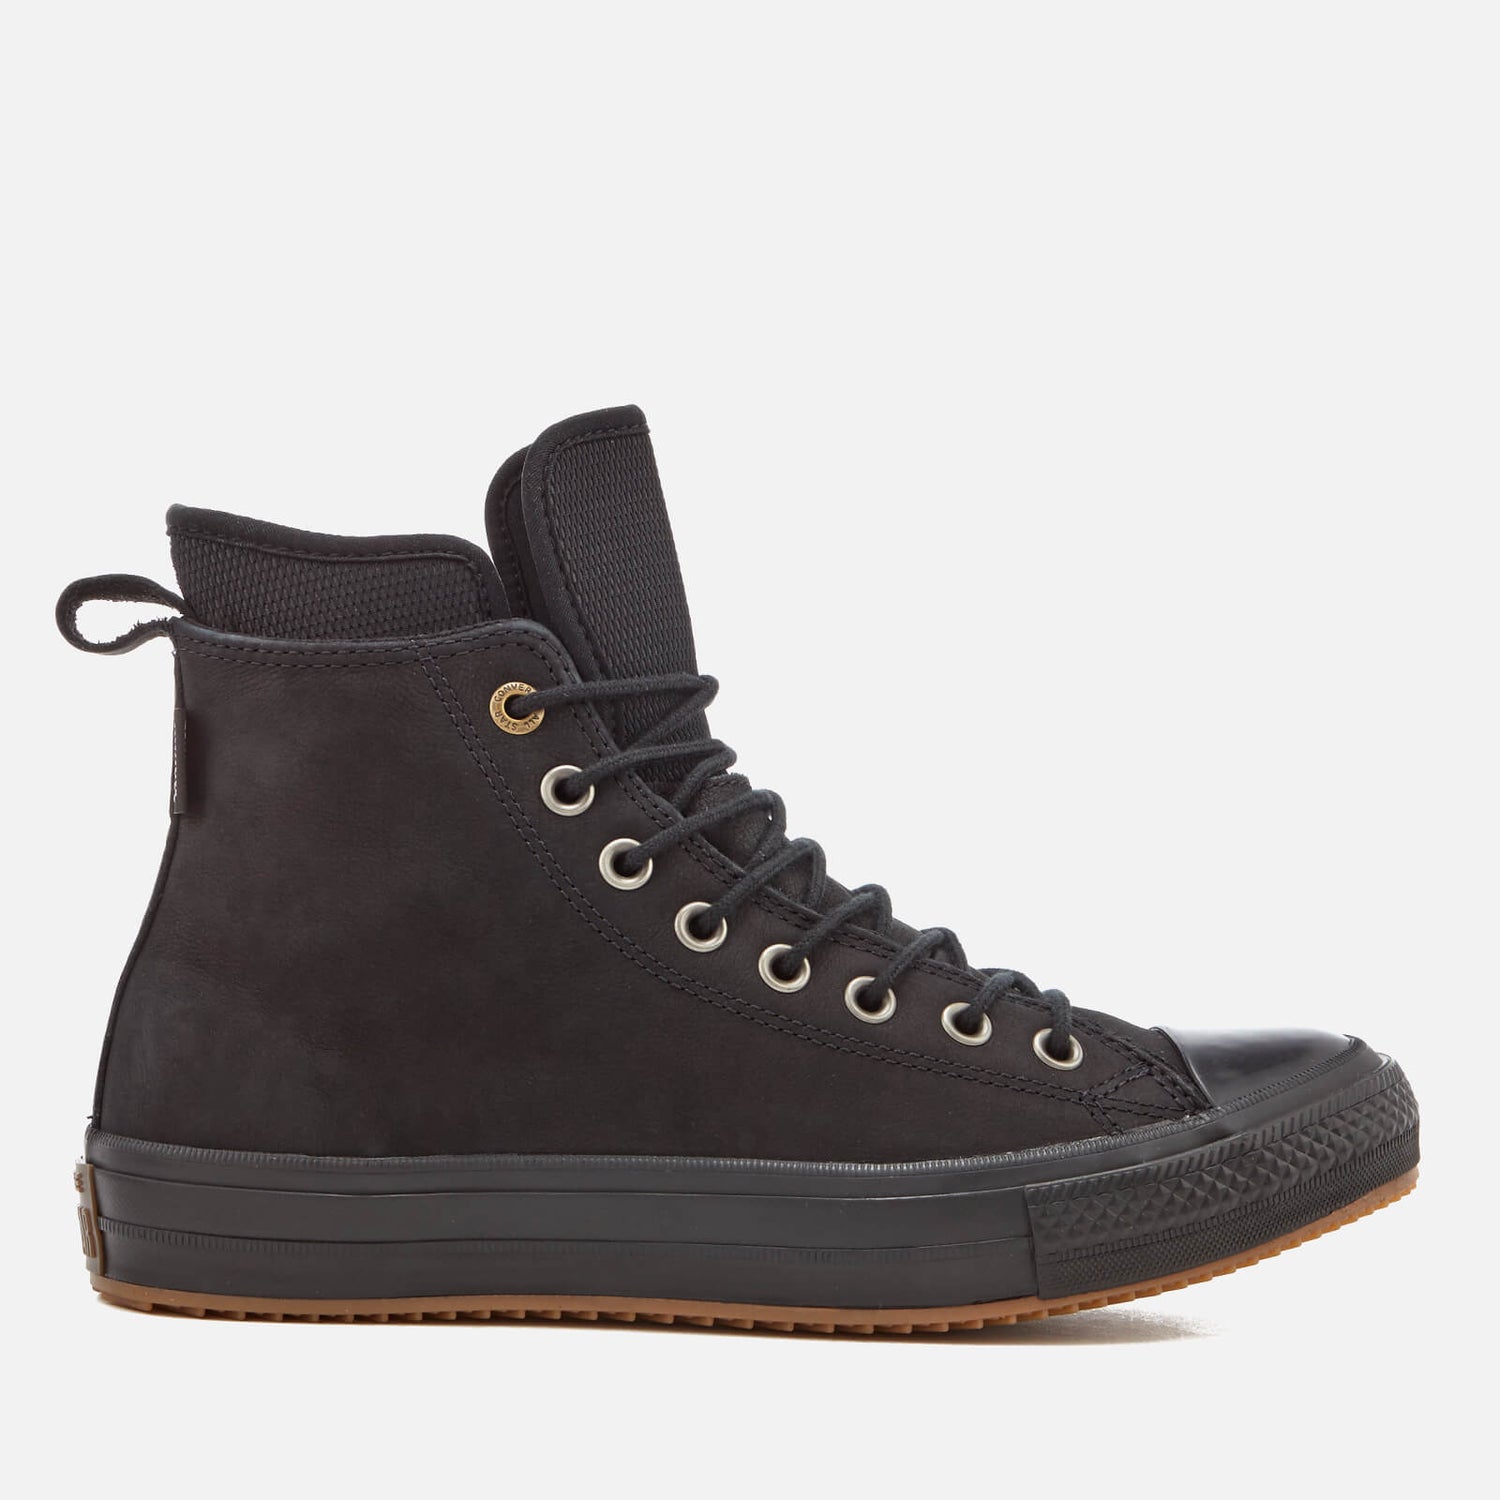 Converse Men's Chuck Taylor All Star Waterproof Boots - Black/Black/Gum ...